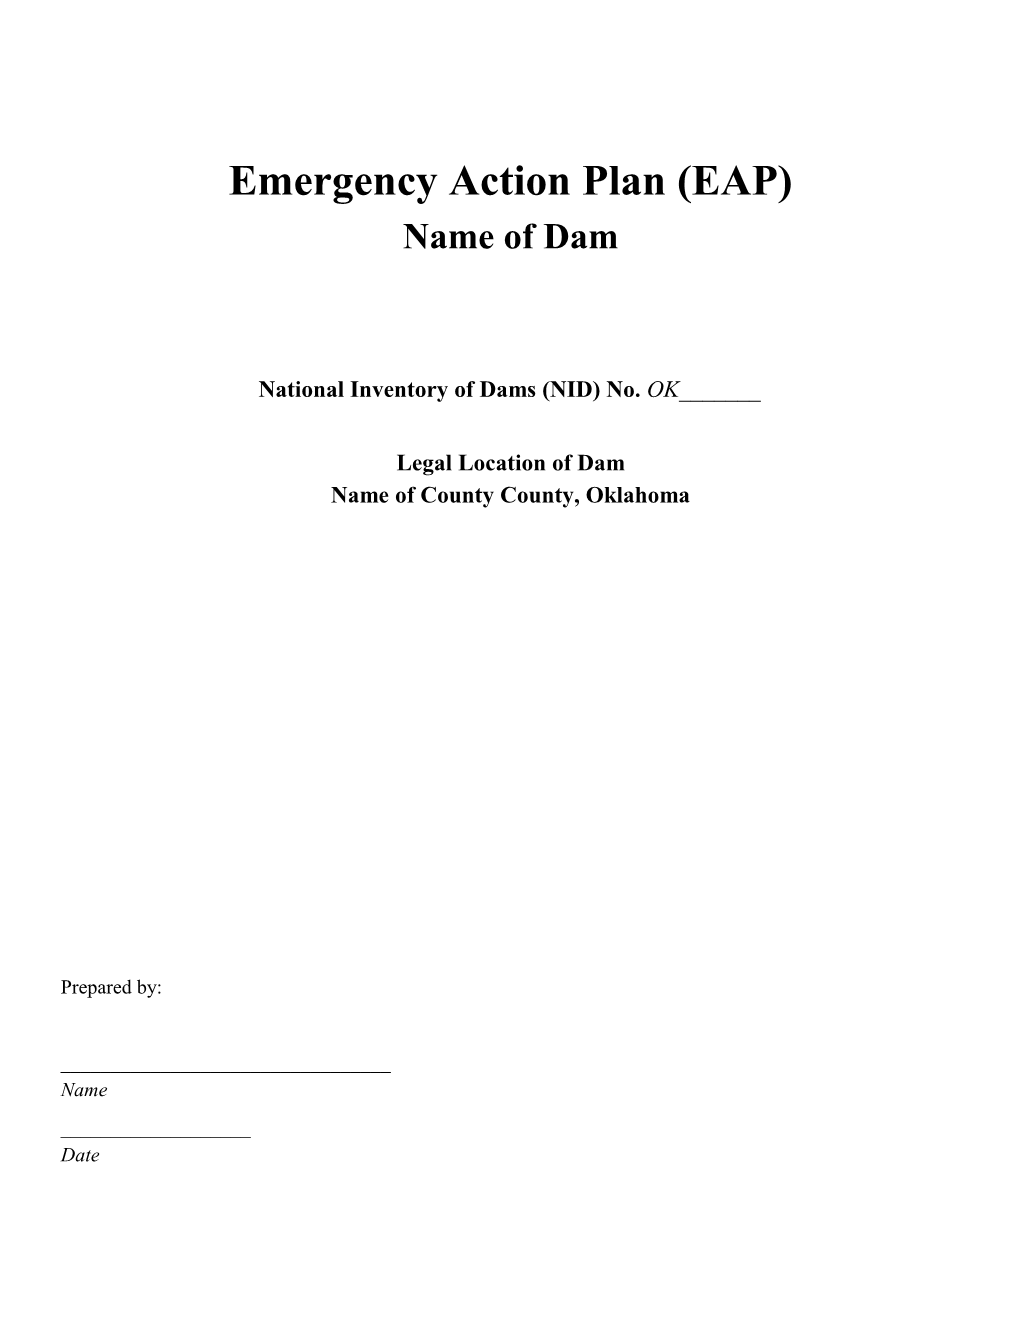 Emergency Action Plan (EAP) s2